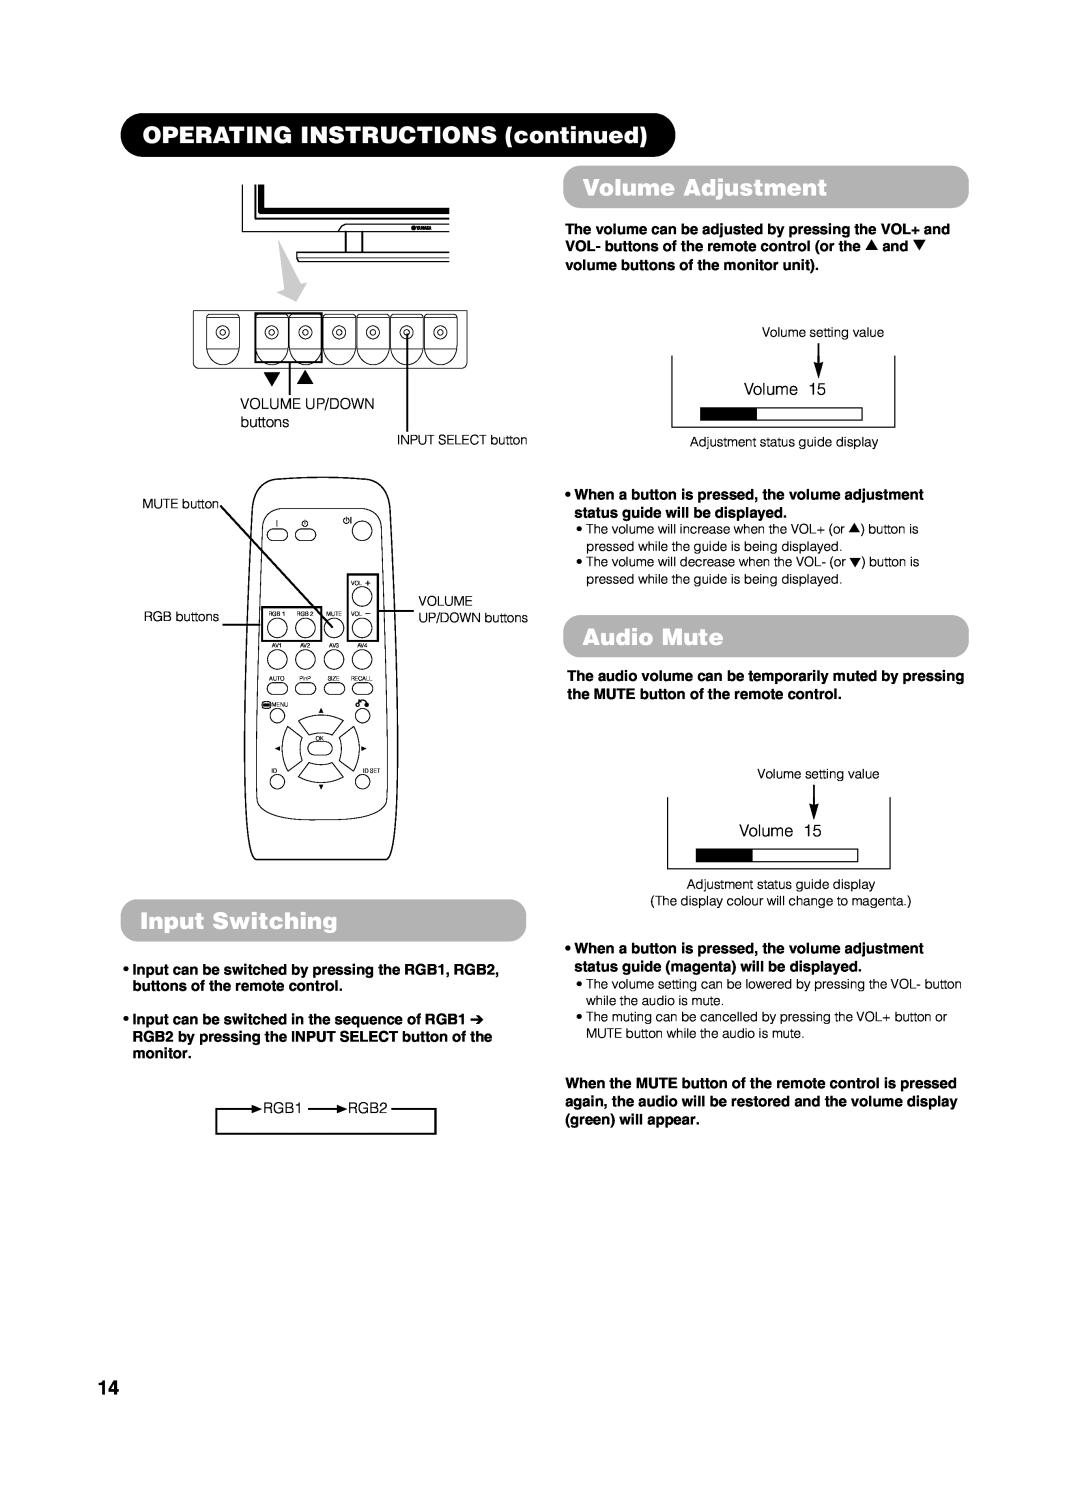 Yamaha PDM-4210E user manual OPERATING INSTRUCTIONS continued Volume Adjustment, Audio Mute, Input Switching 